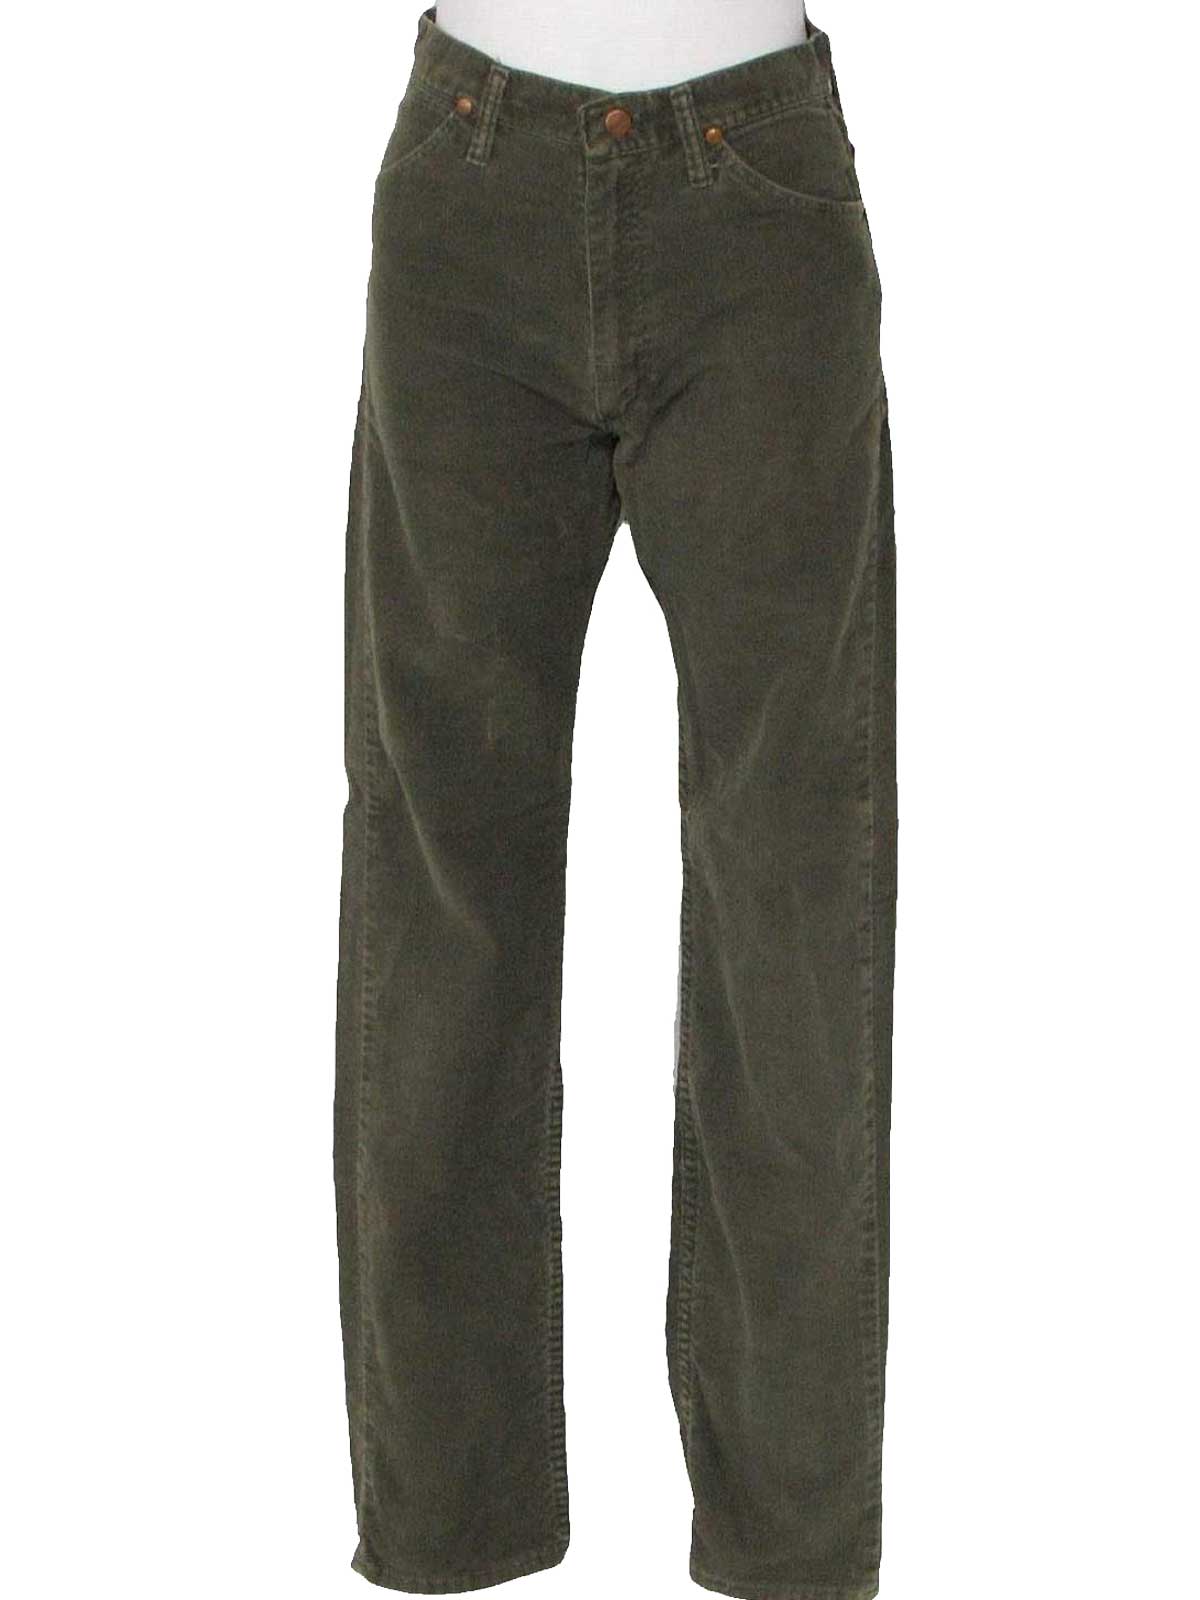 1970's Vintage Wrangler Pants: 70s -Wrangler- Mens olive green front ...